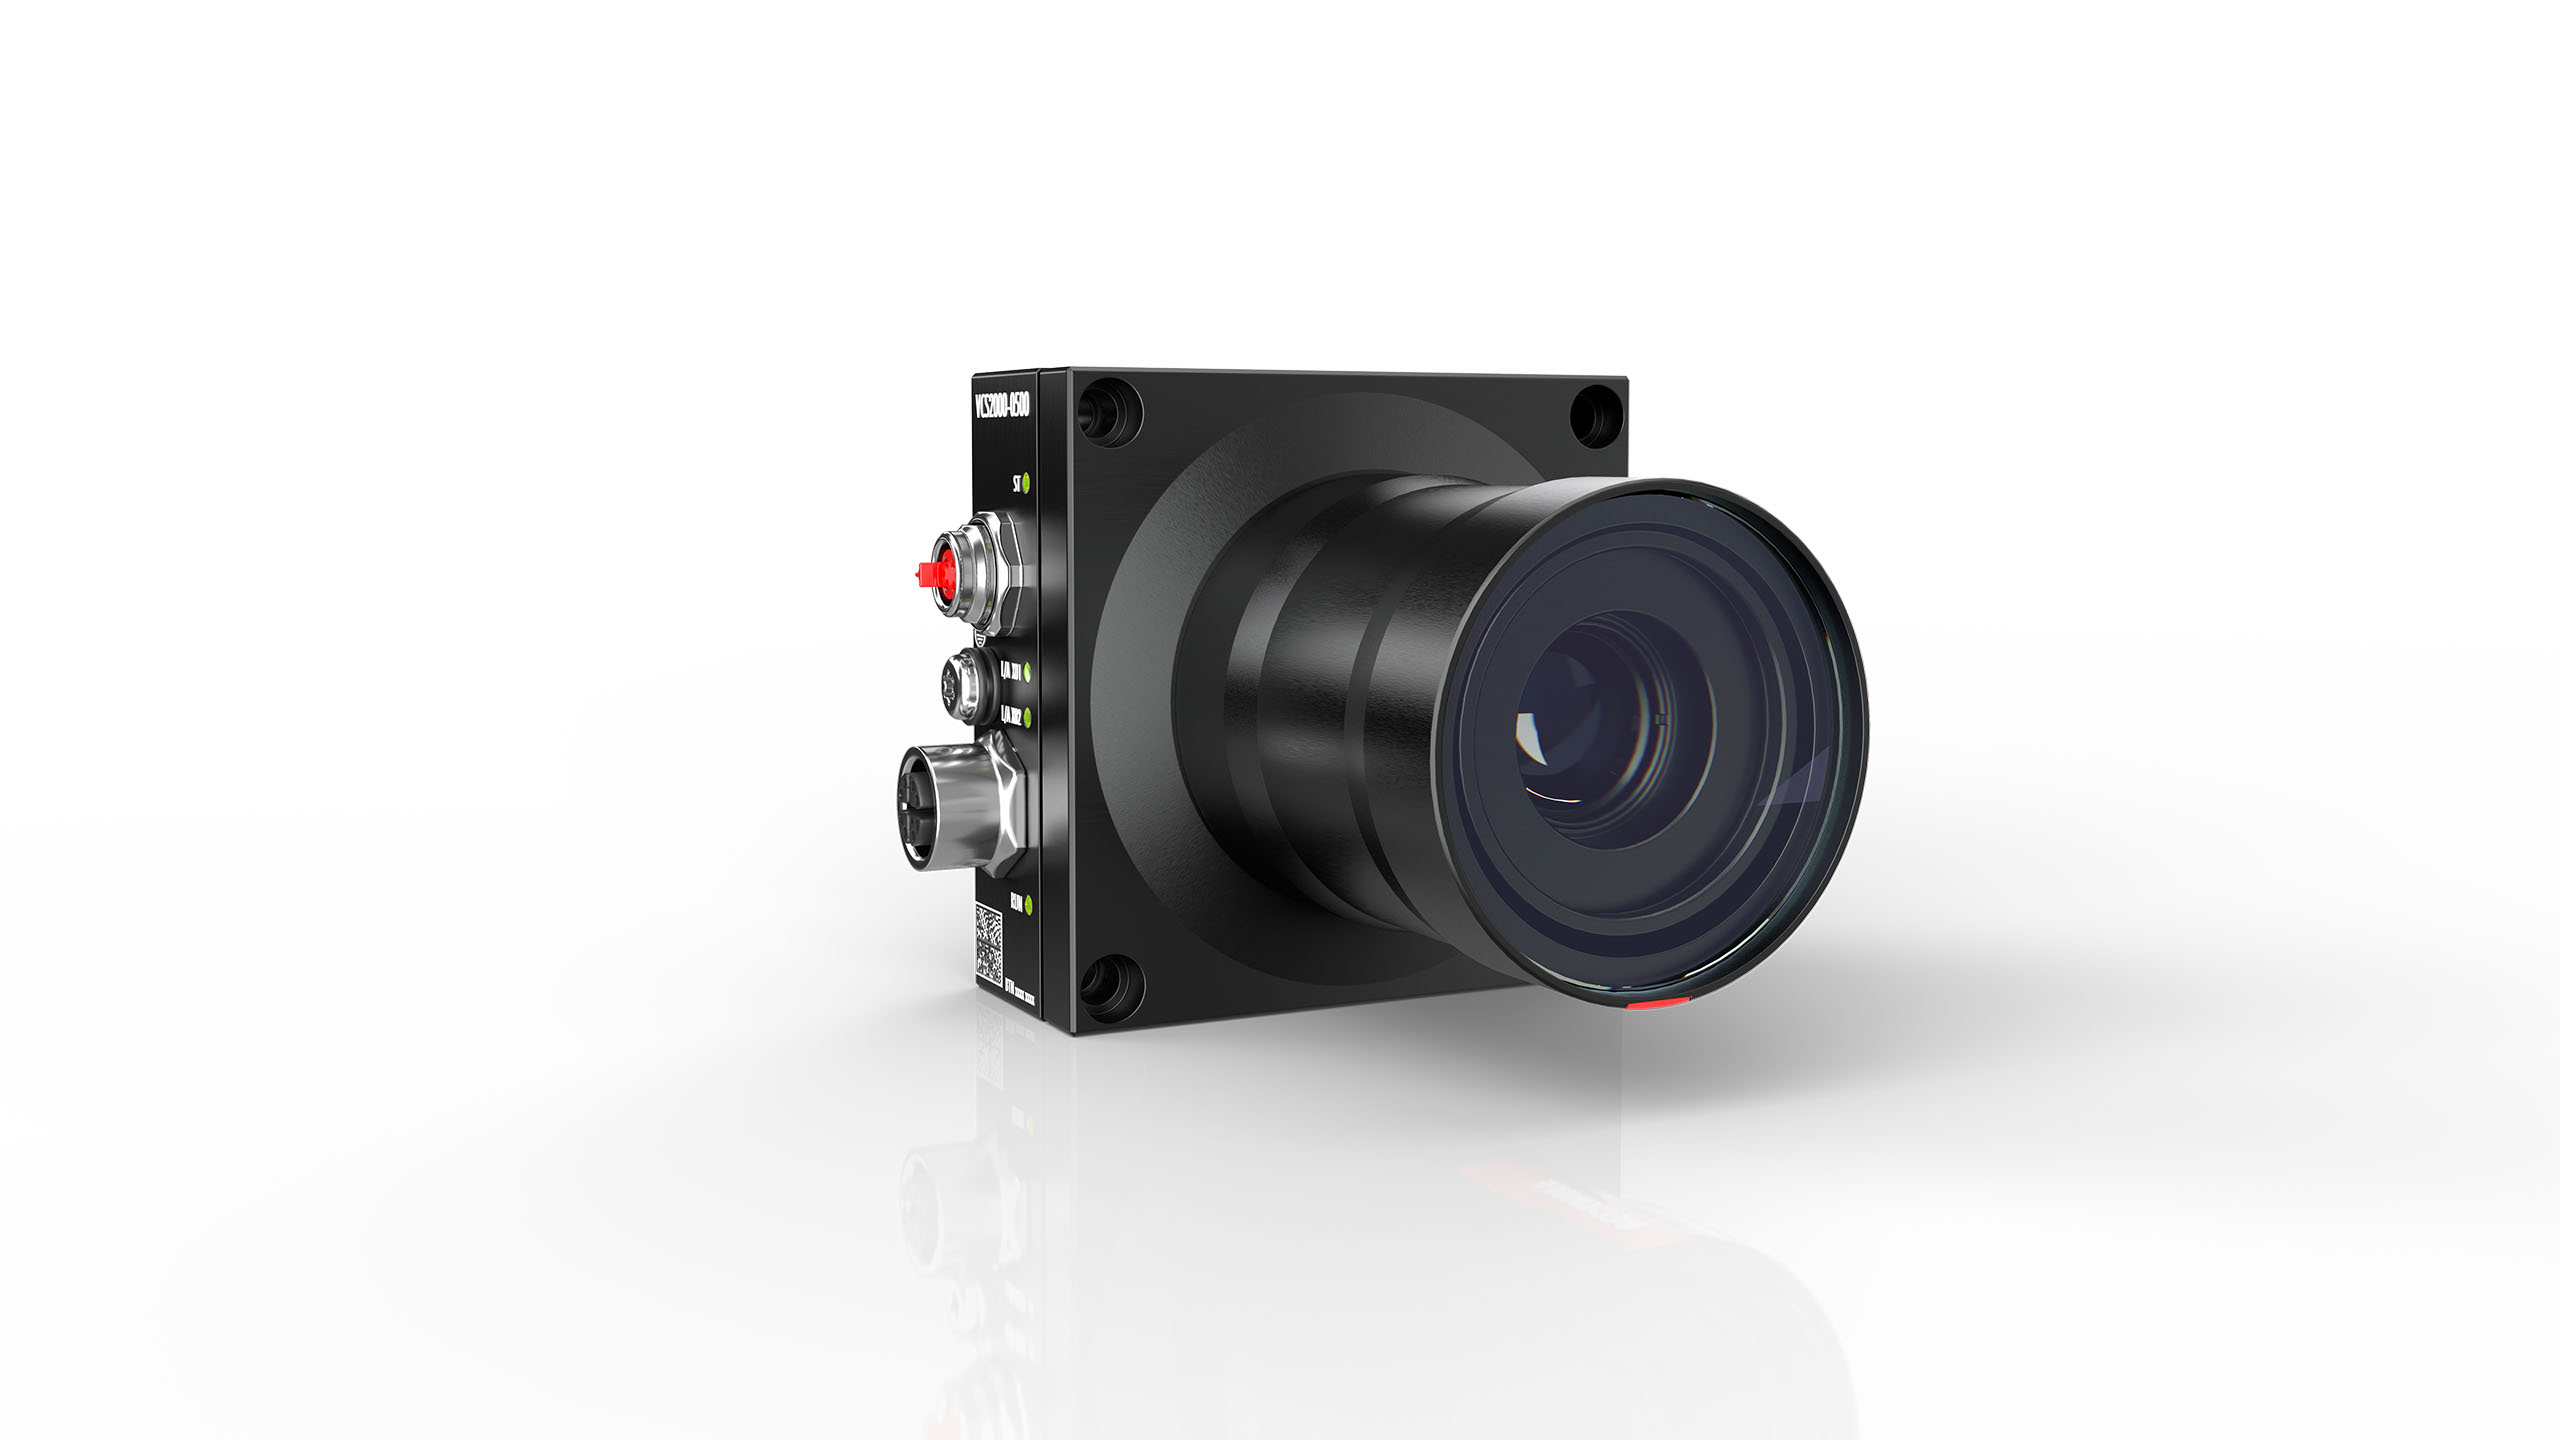 VCS2020-0500 | Area scan camera, 2.5 Gbit/s, Sony IMX567, monochrome, 5.1 MP